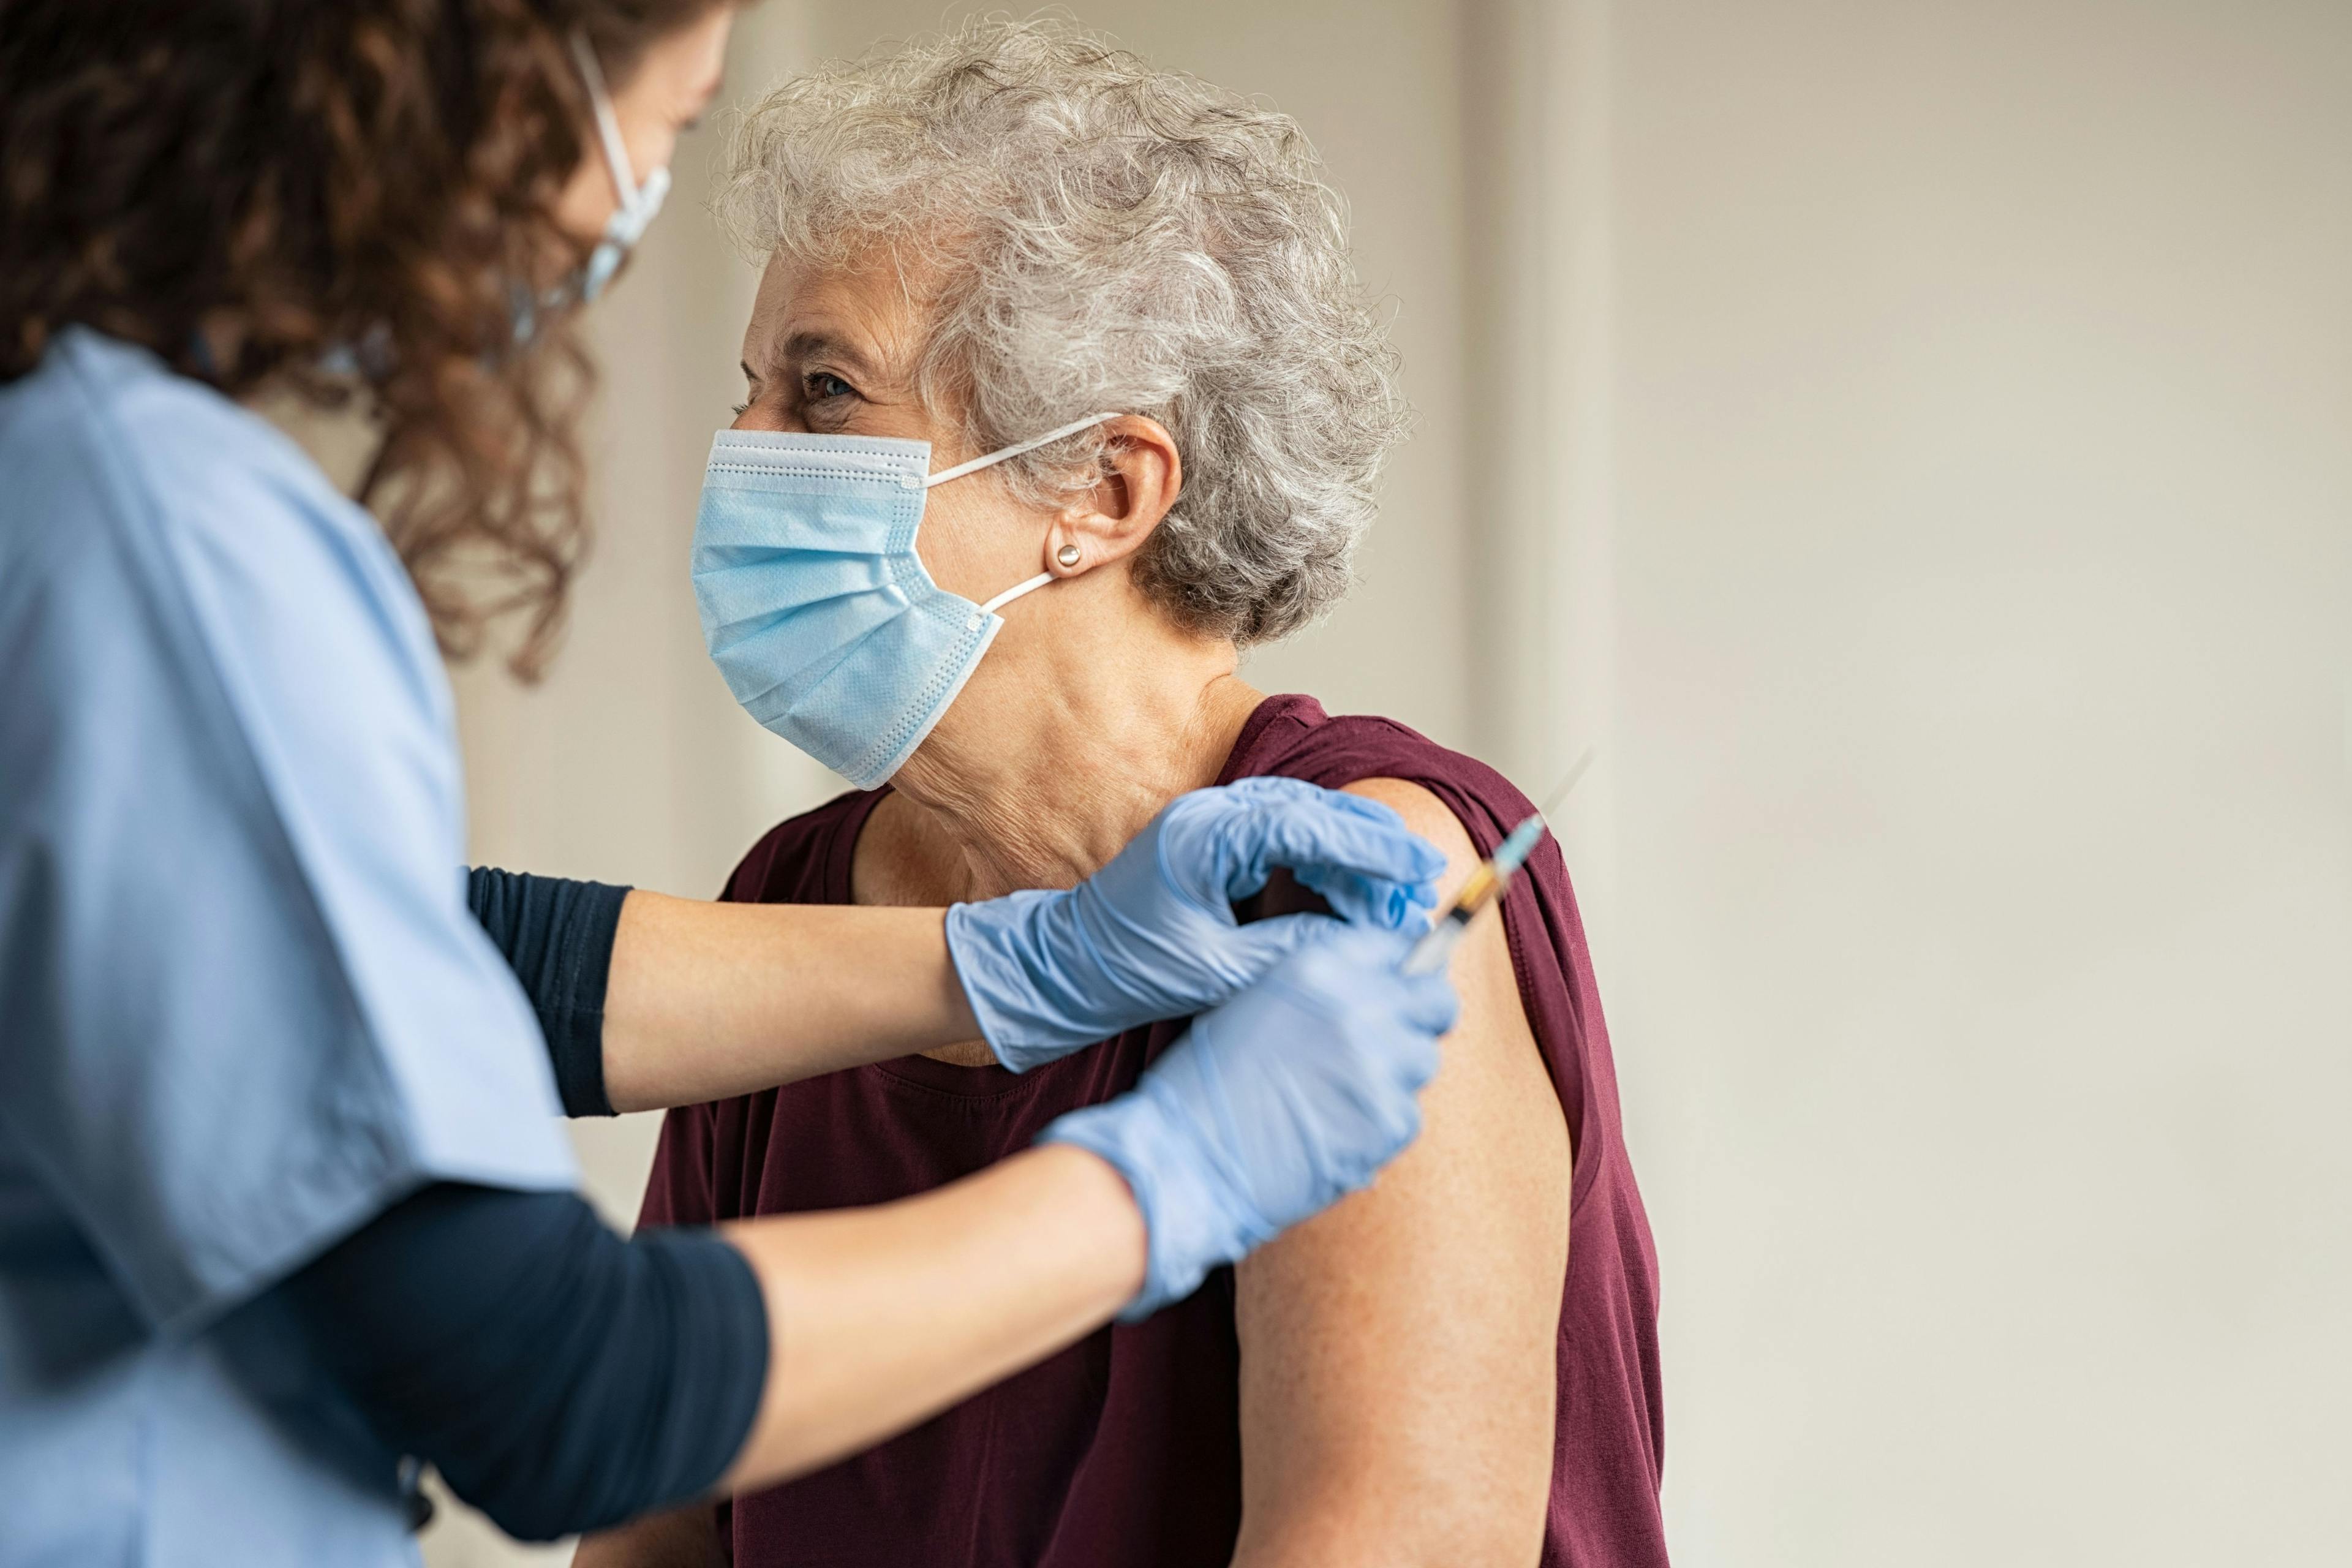 Doctor giving Covid vaccine to senior woman | Image credit: Rido - stock.adobe.com